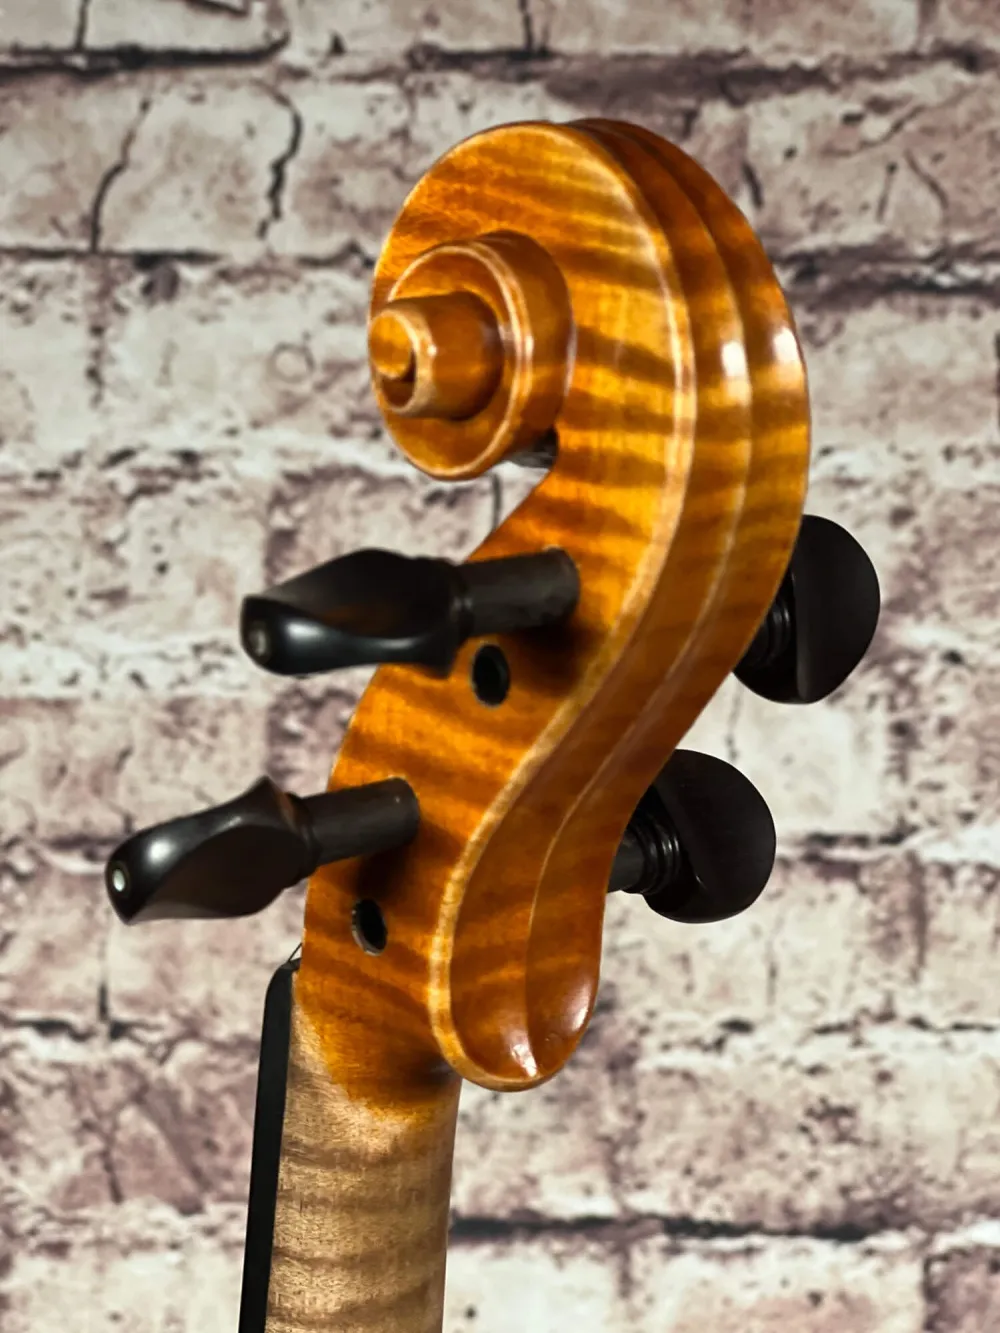 Nagy Károly 4/4 "Orchestra" Geige (Violine) Handarbeit aus RO